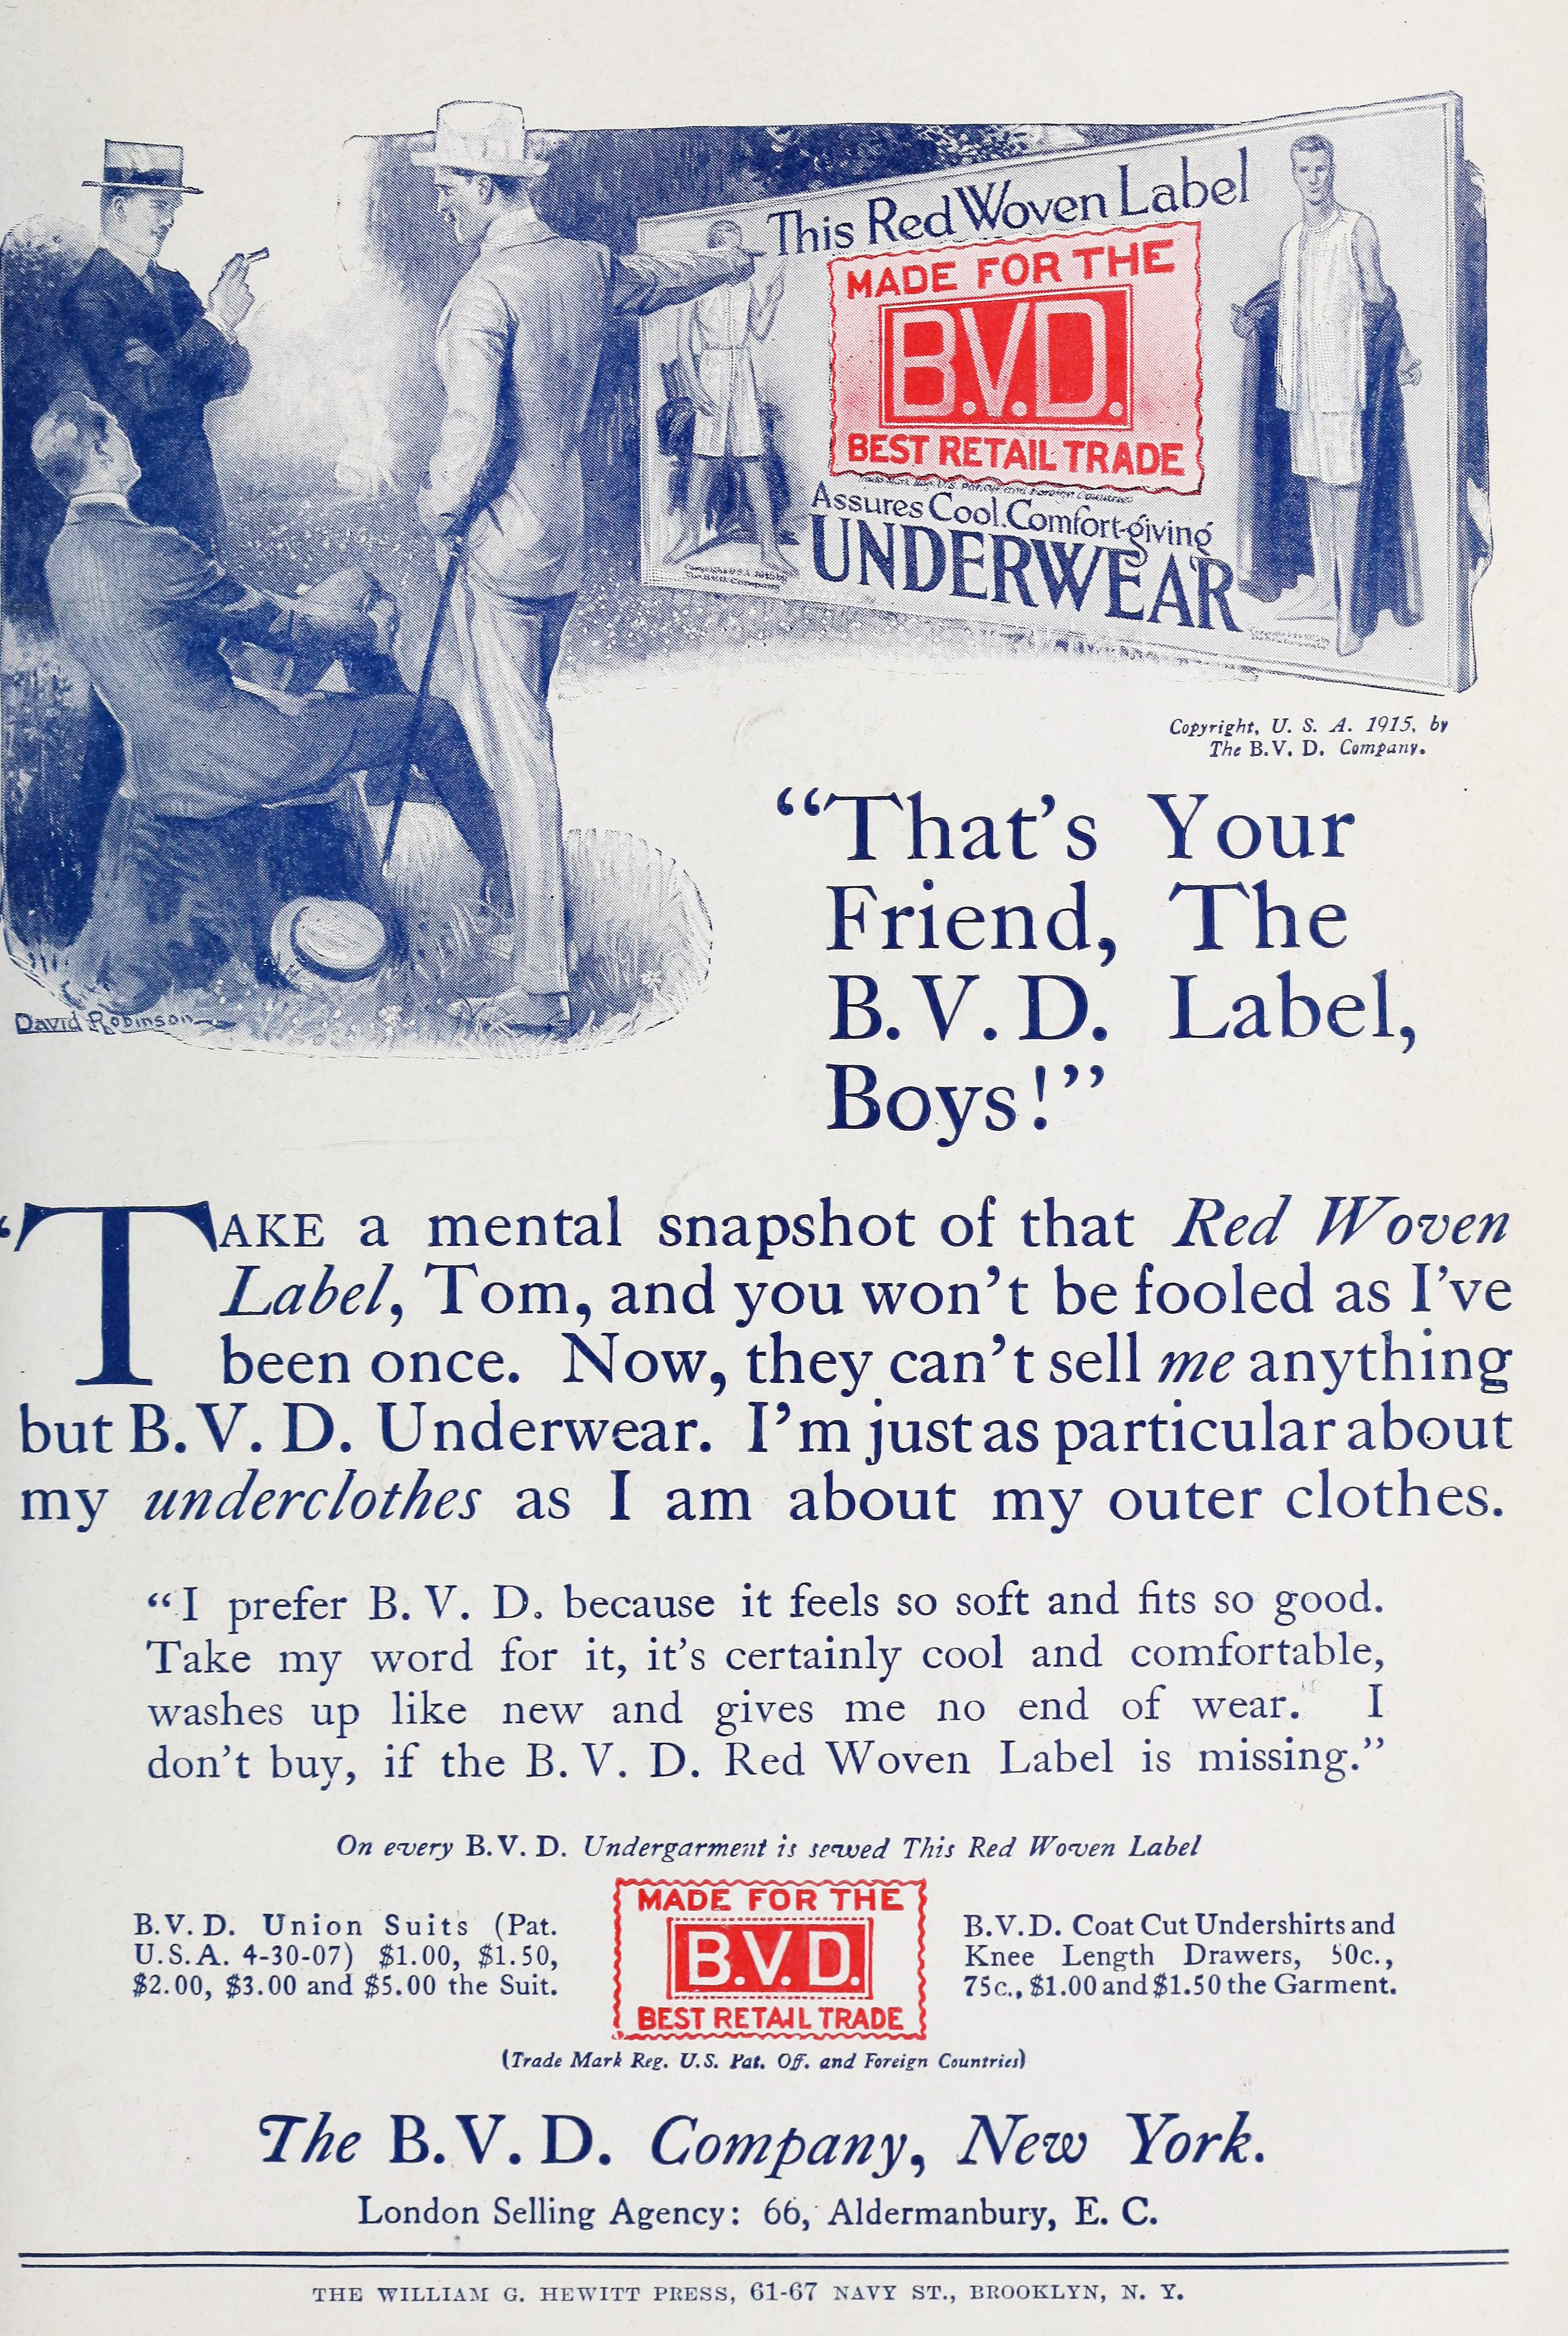 https://ctgpublishing.com/wp-content/uploads/2013/11/BVD-mens-underwear-advertisement-1915-2.jpg